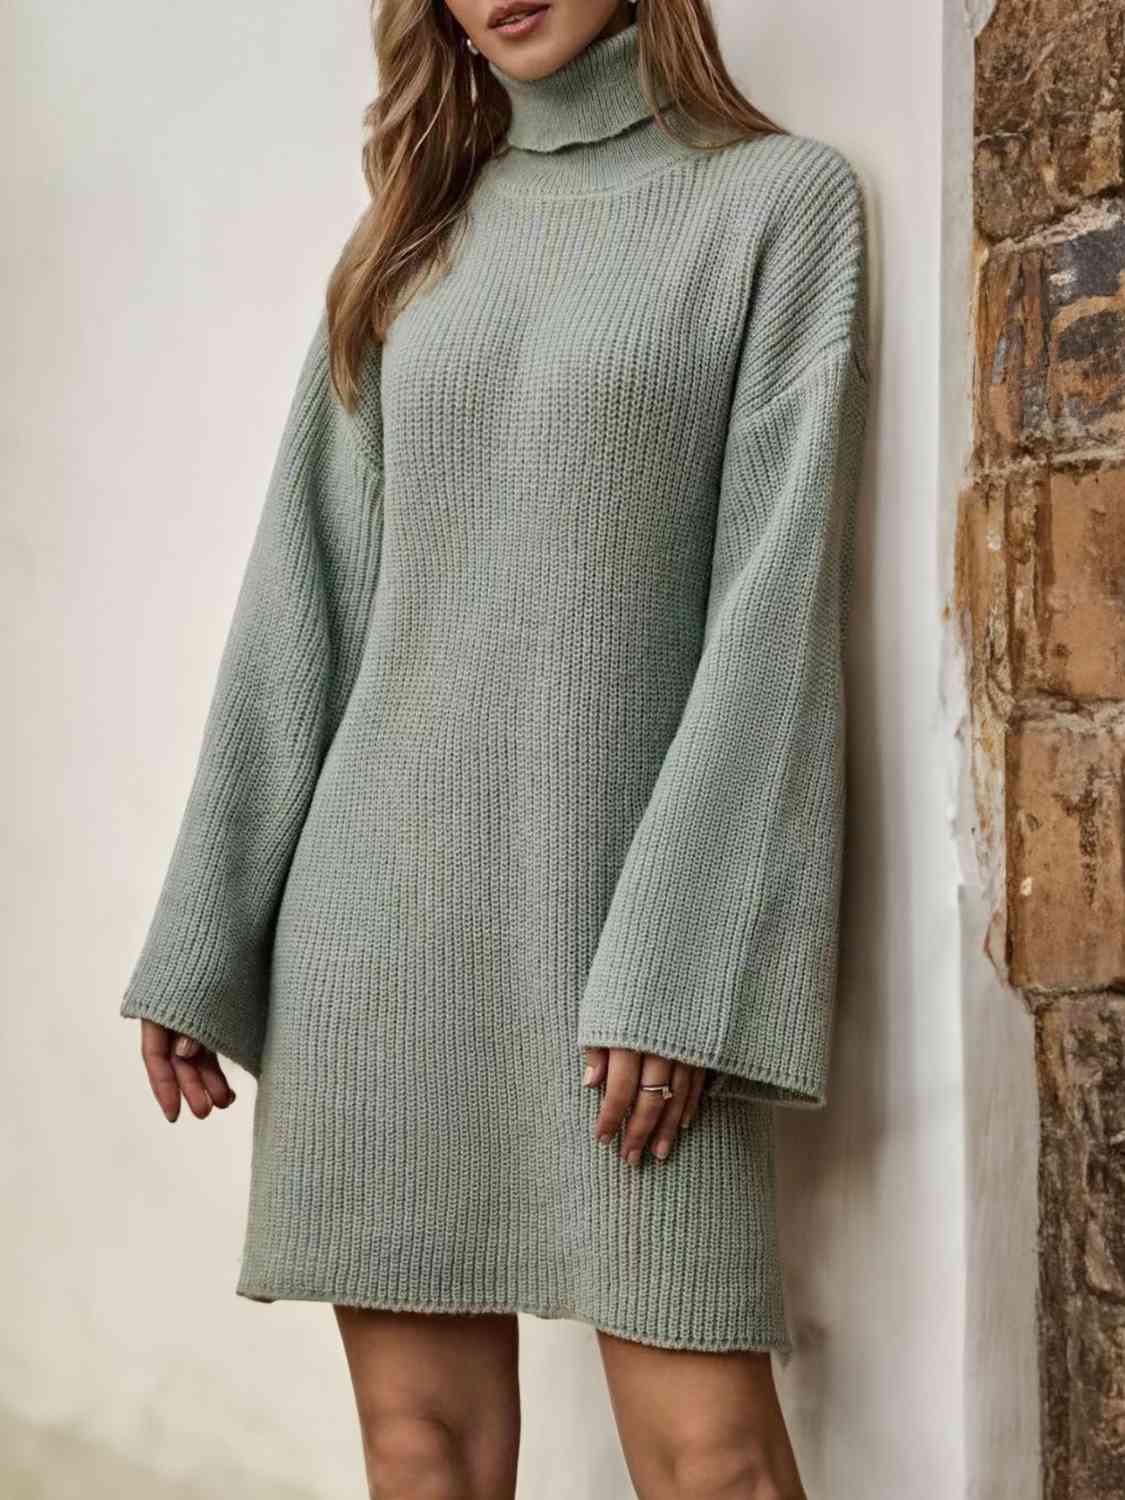 Warm Hug Turtleneck Sweater Dress